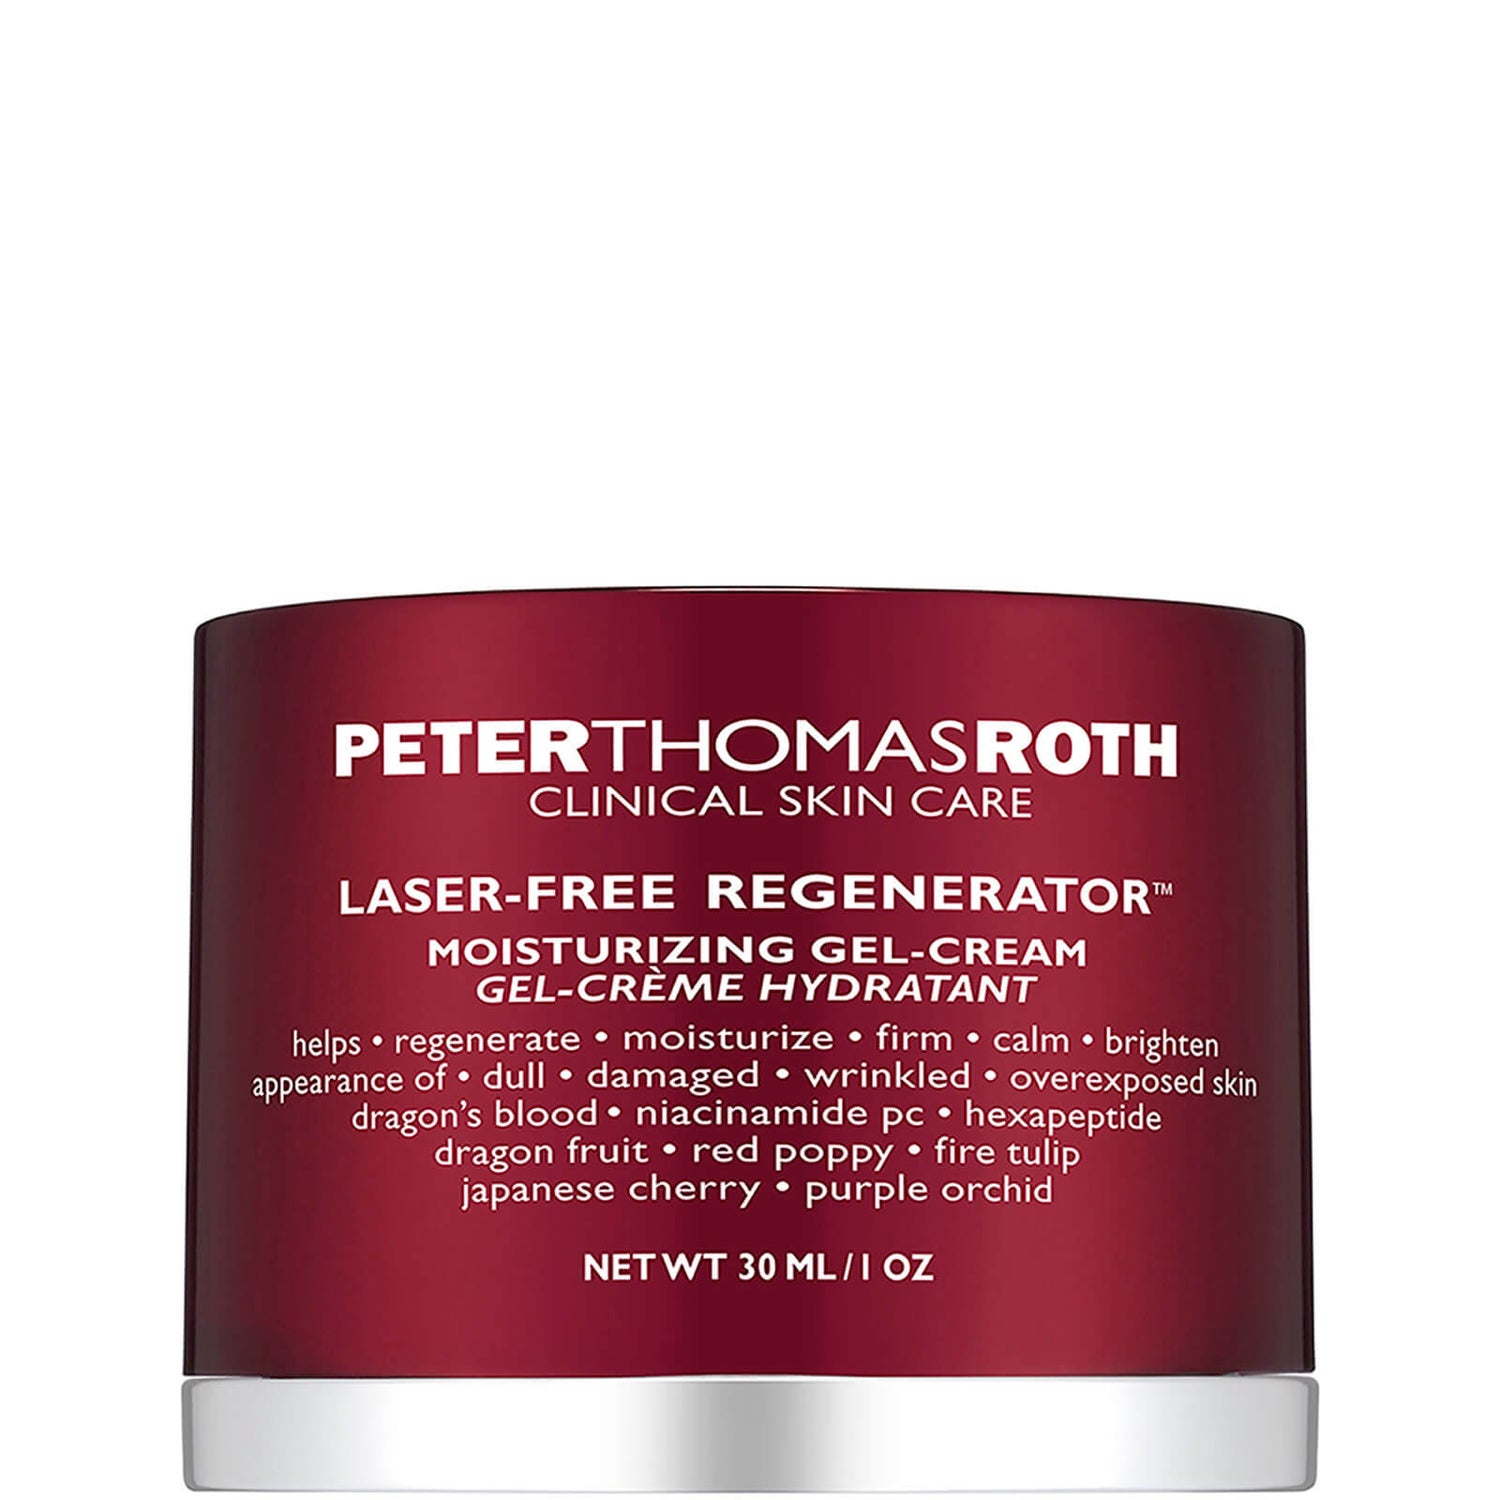 Peter Thomas Roth Laser-Free Regenerator Moisturizing Gel-Cream